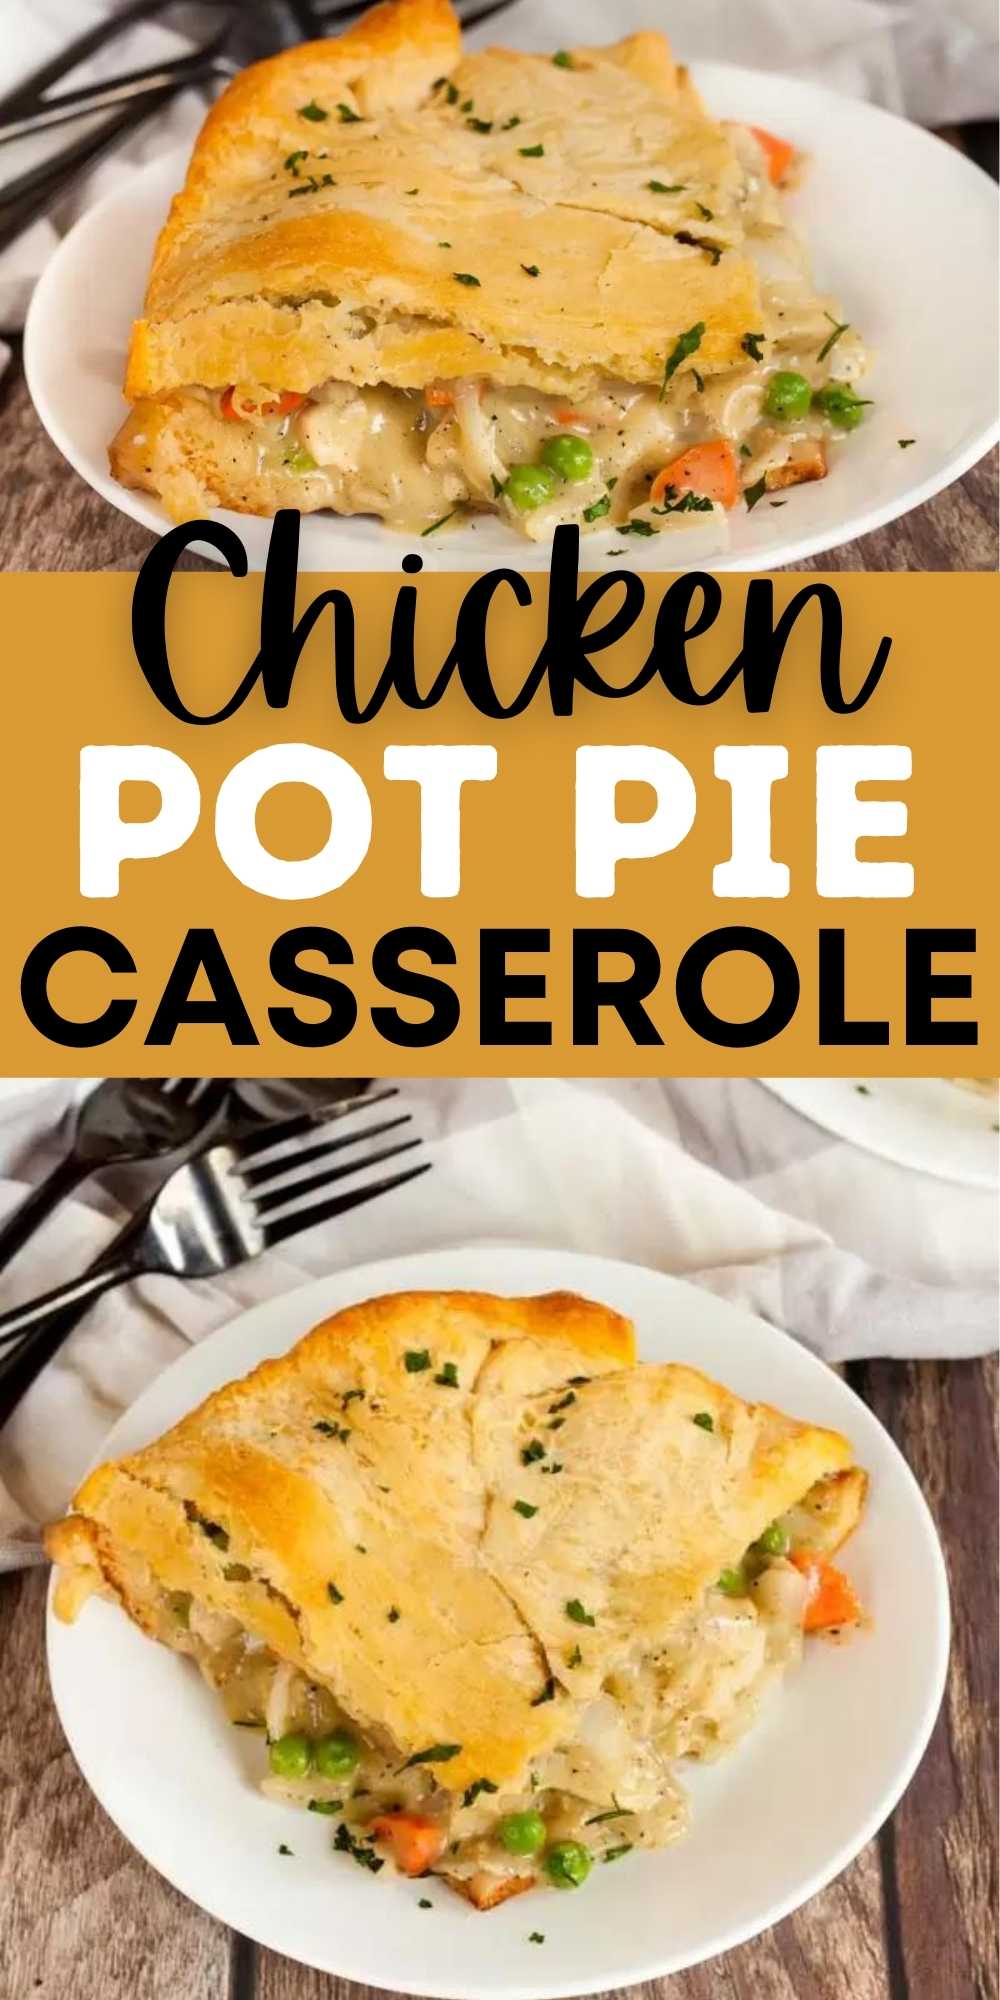 https://www.eatingonadime.com/wp-content/uploads/2019/11/Chicken-Pot-Pie-Casserole-Pin-3.jpg